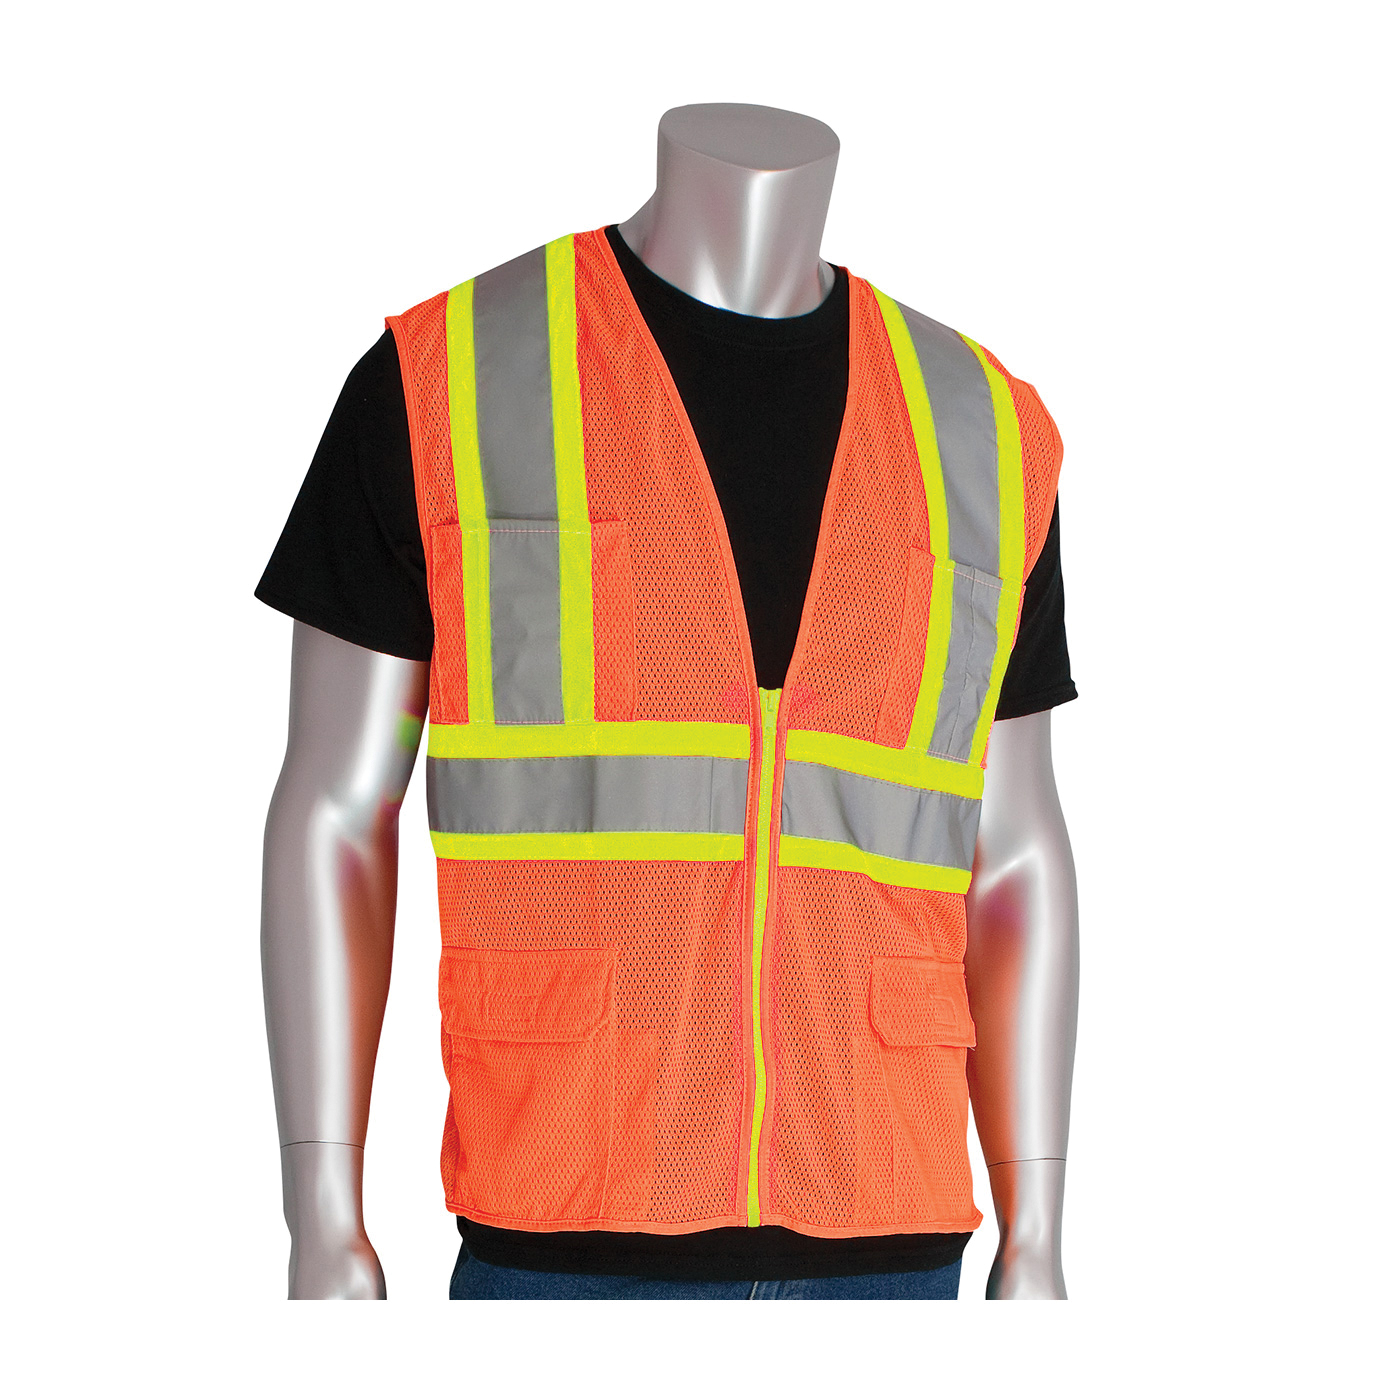 PIP® 302-MAPMOR-3X 2-Tone Premium Surveyor Safety Vest, 3XL, Hi-Viz Orange, Polyester, Zipper Closure, 11 Pockets, ANSI Class: Class 2, Specifications Met: ANSI 107 Type R